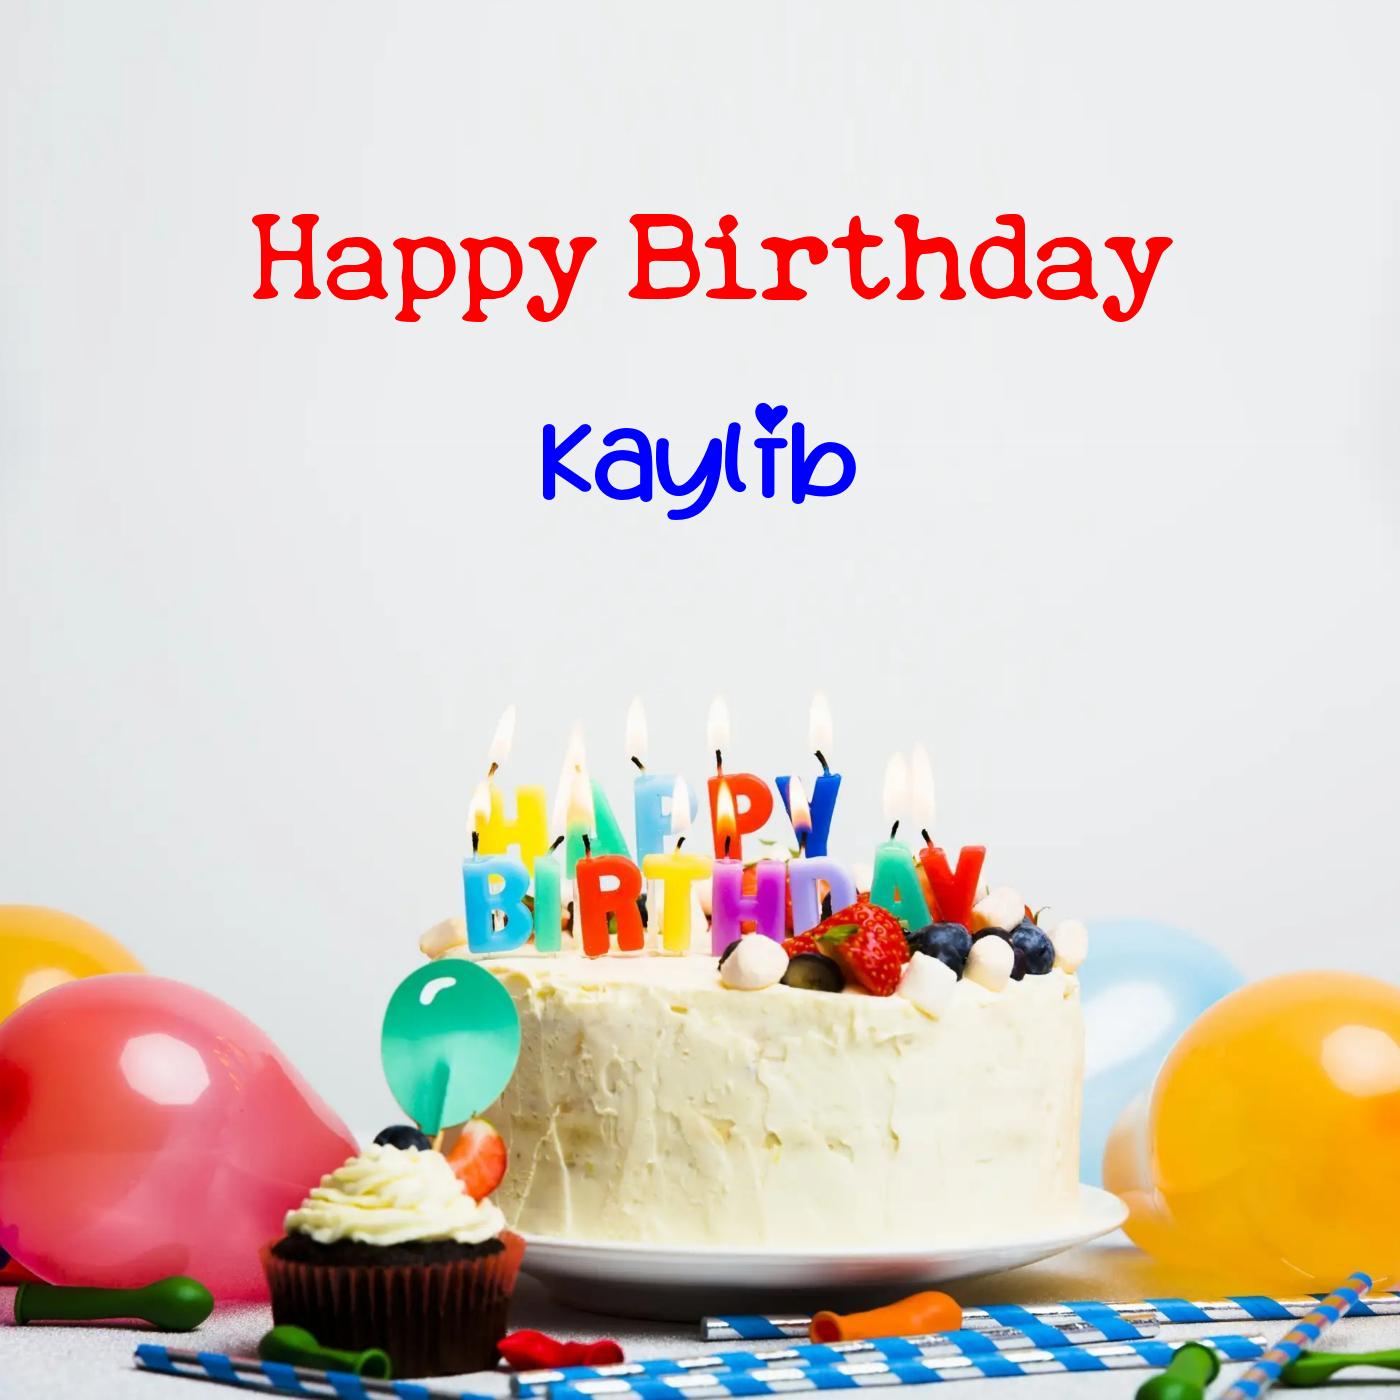 Happy Birthday Kaylib Cake Balloons Card